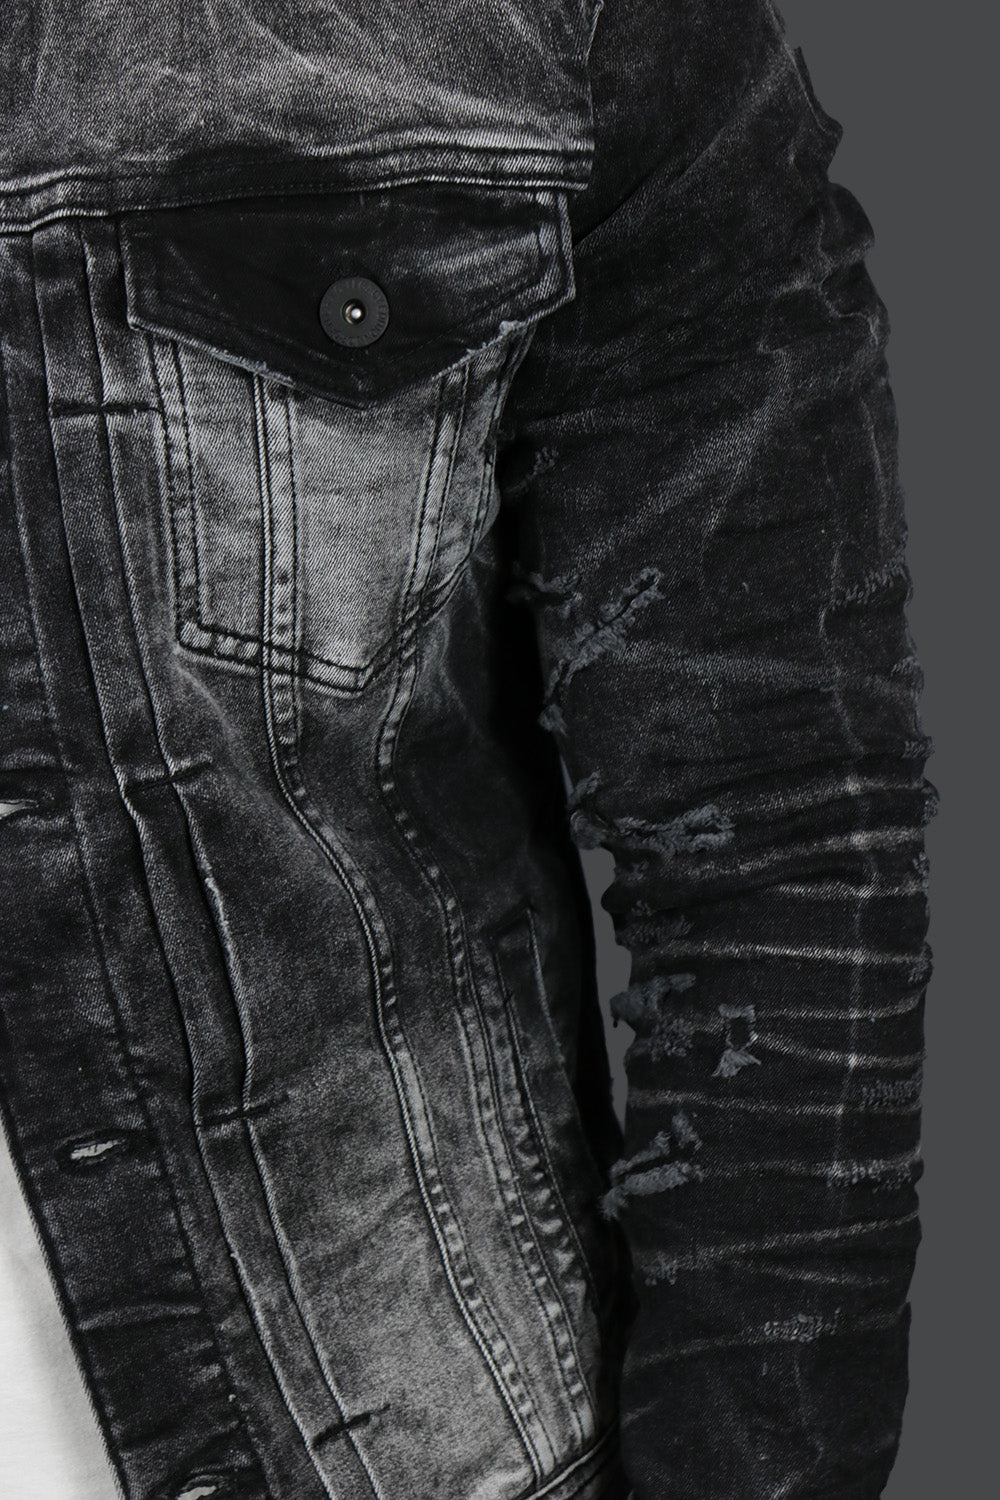 The wearer's left on the Industrial Black Distressed Denim Jacket | Jordan Craig